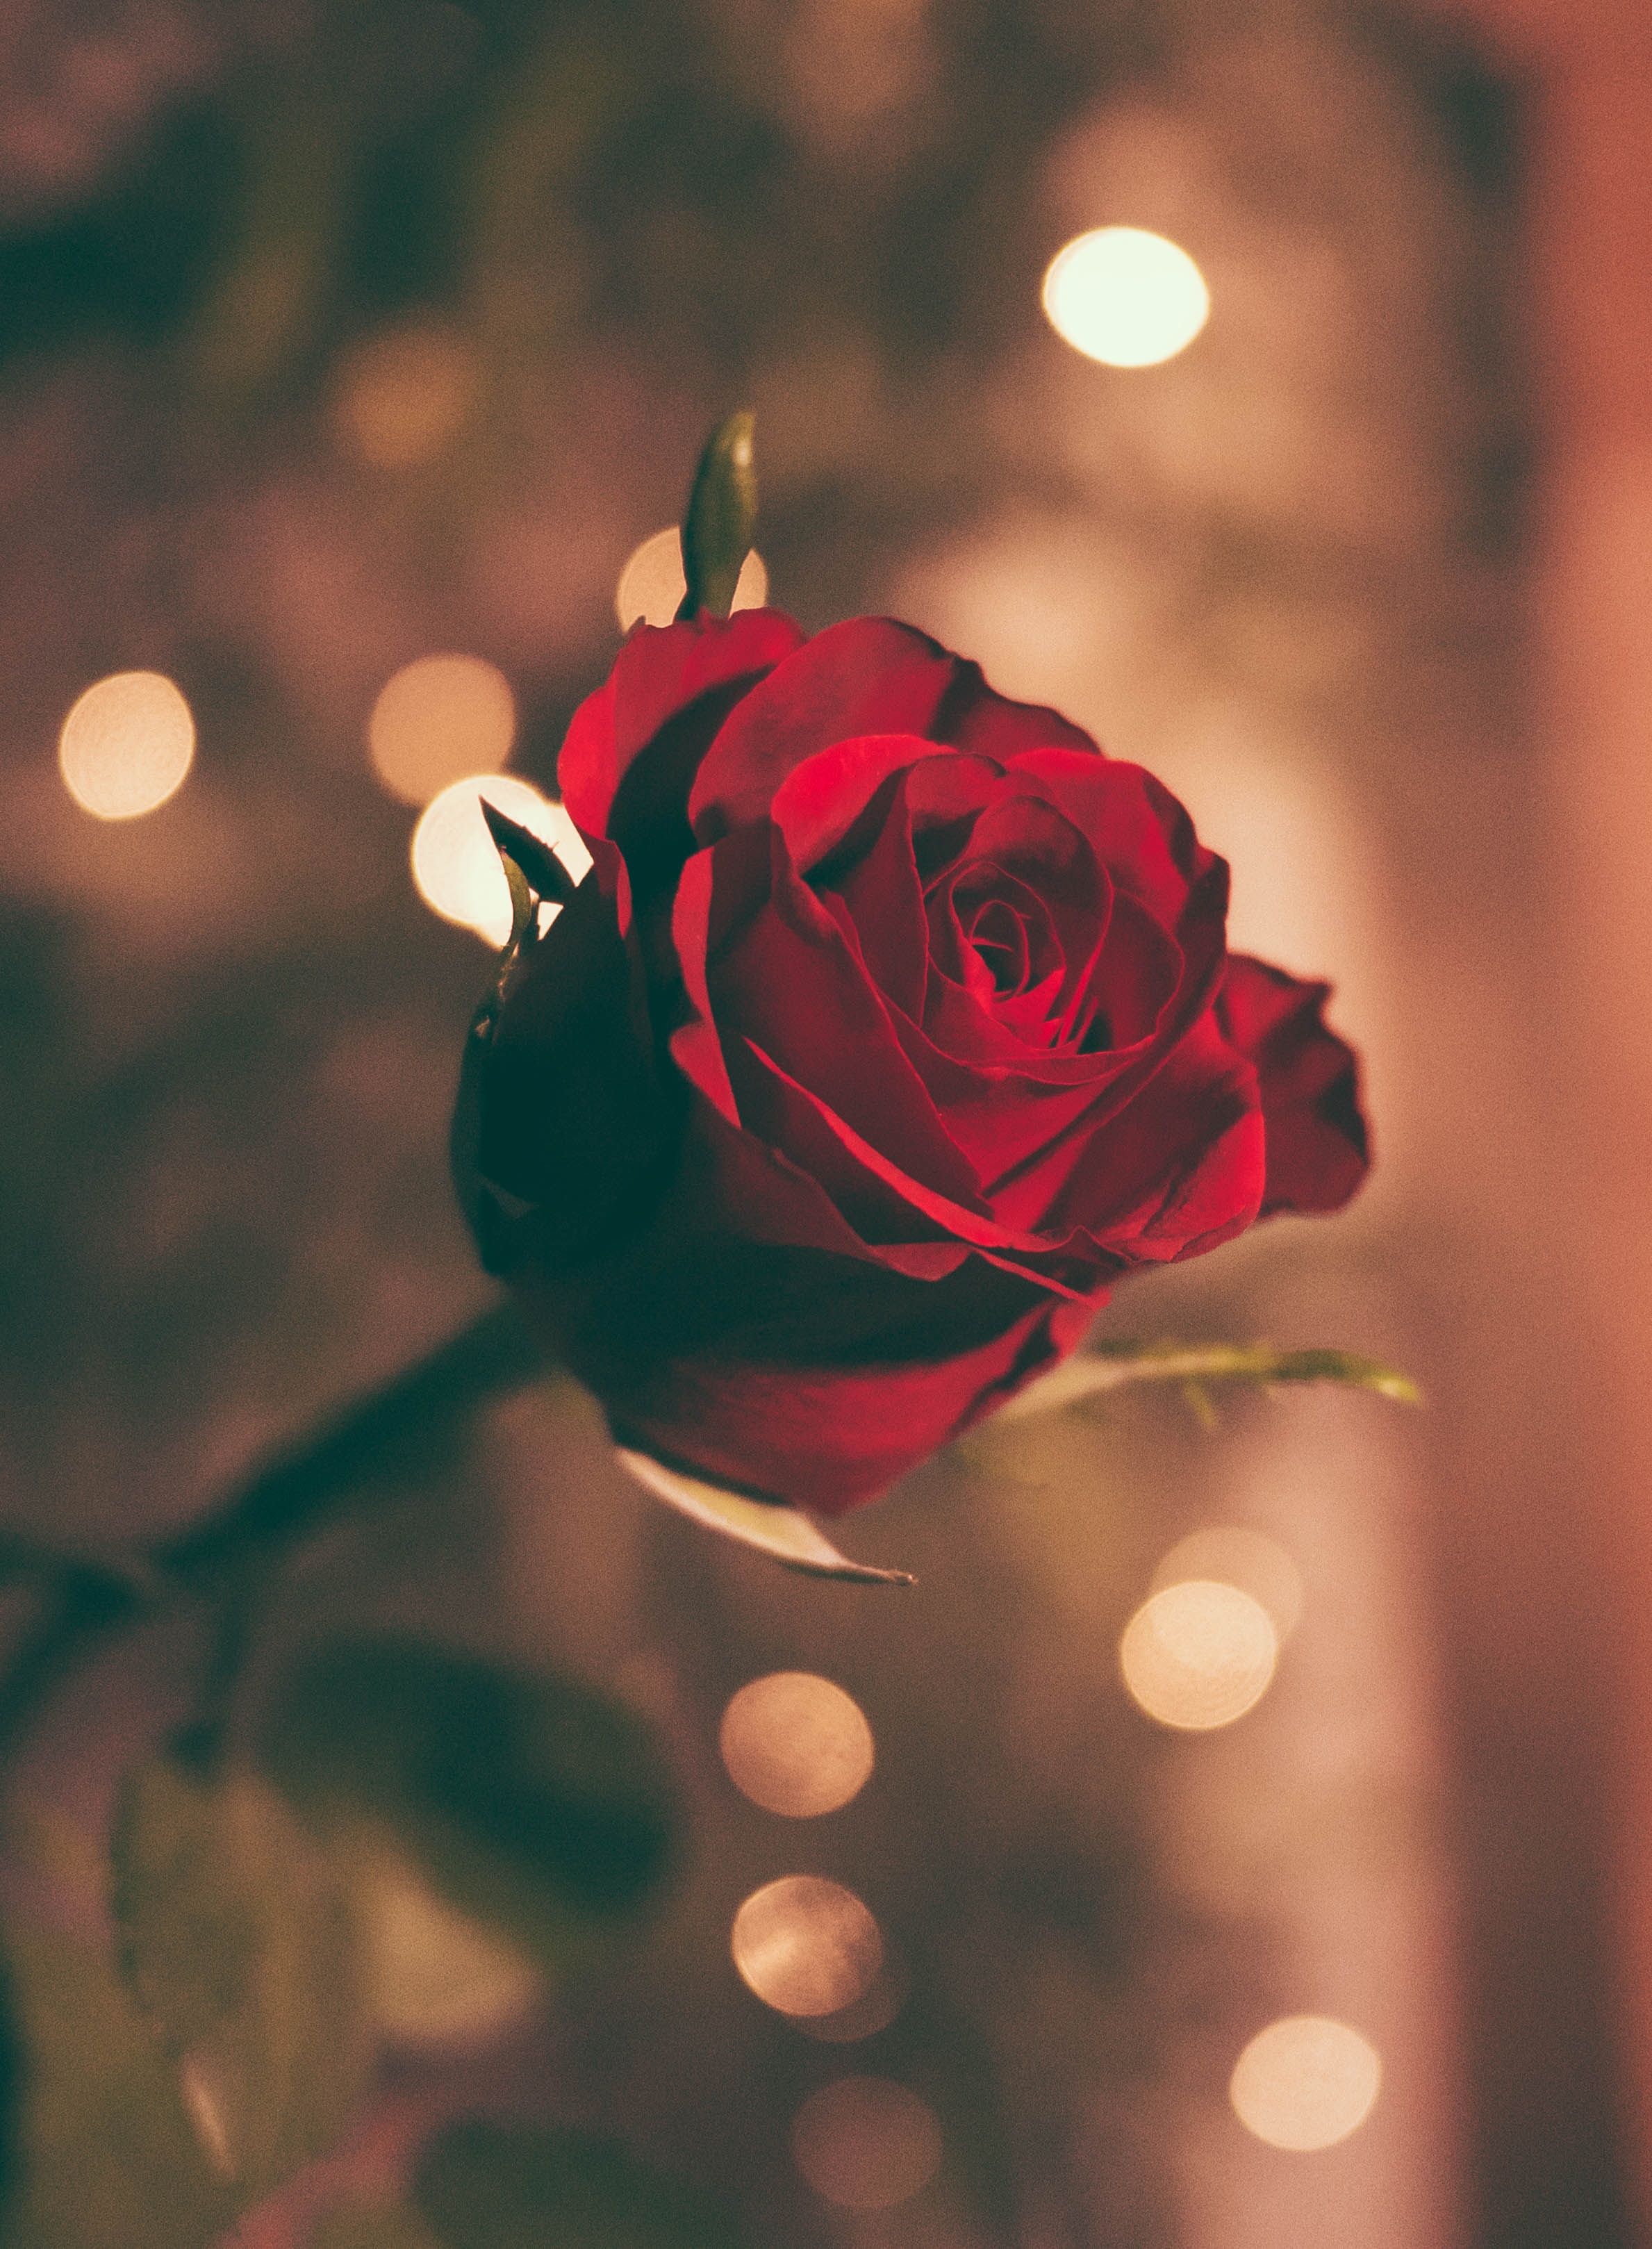 A red rose. | Source: Unsplash